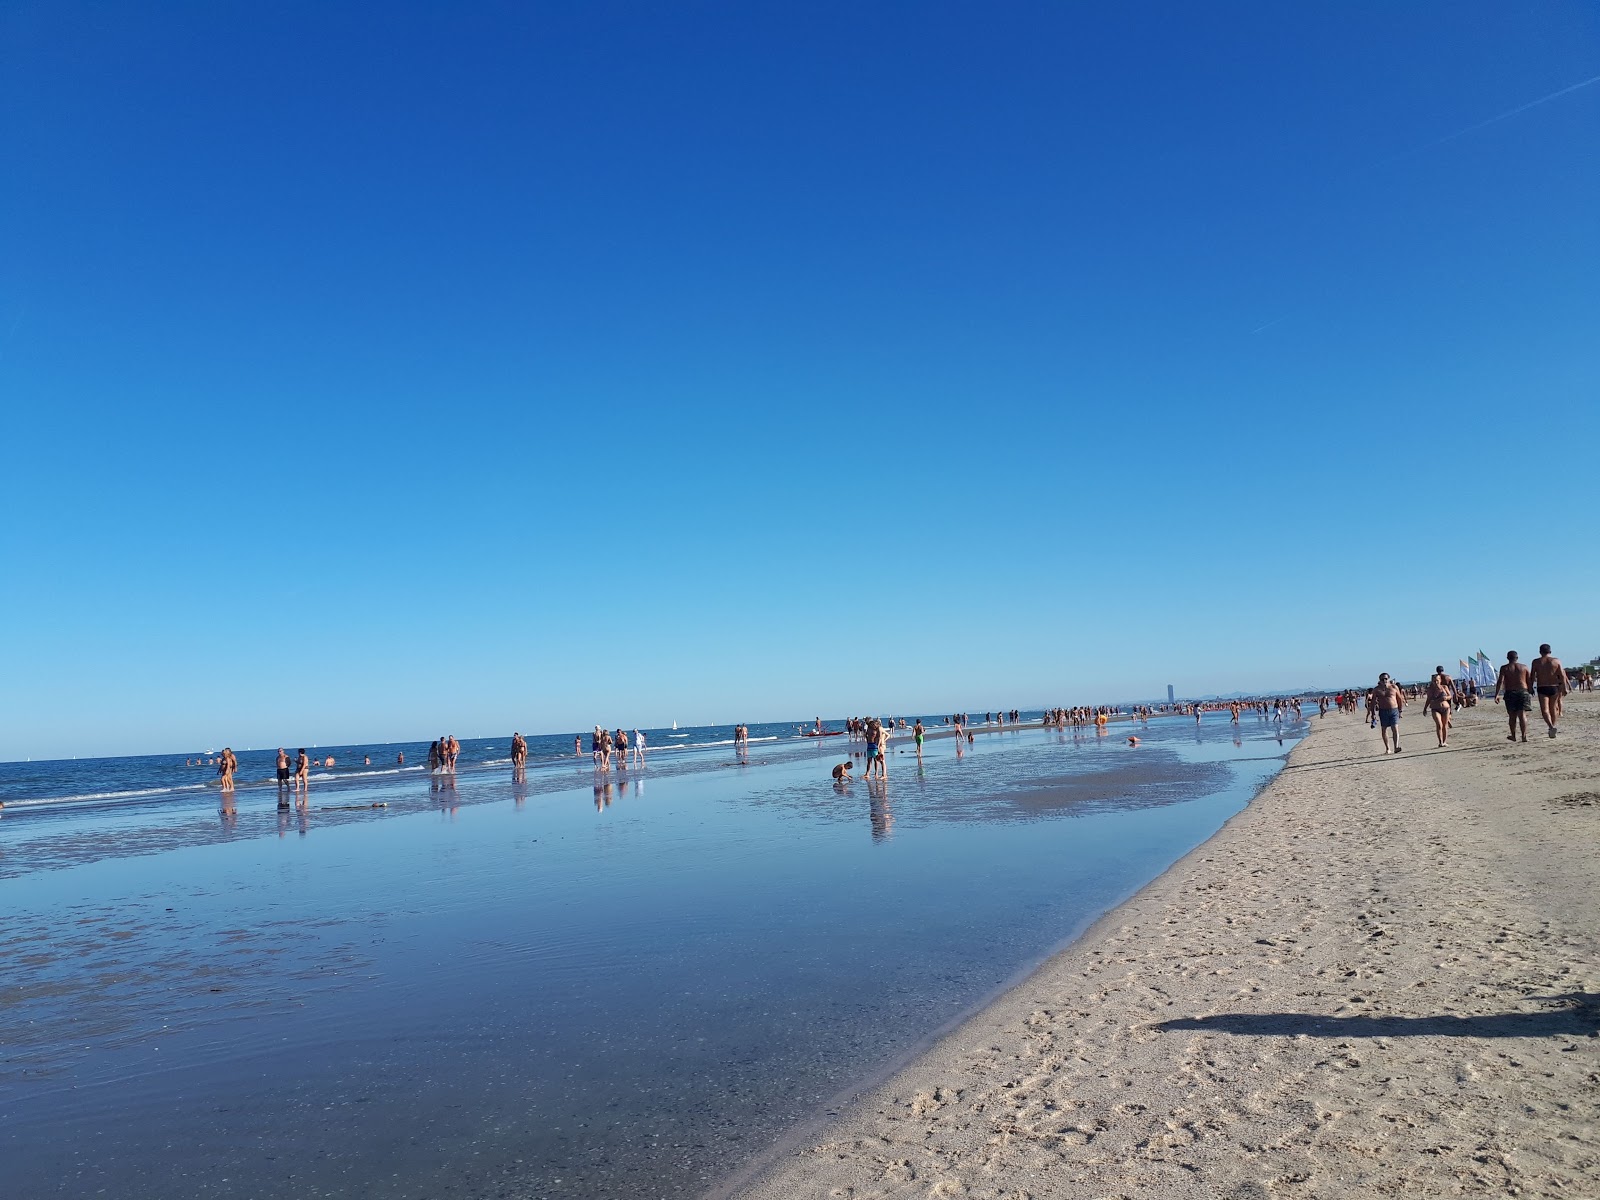 Foto de Spiaggia libera di Cervia - lugar popular entre los conocedores del relax